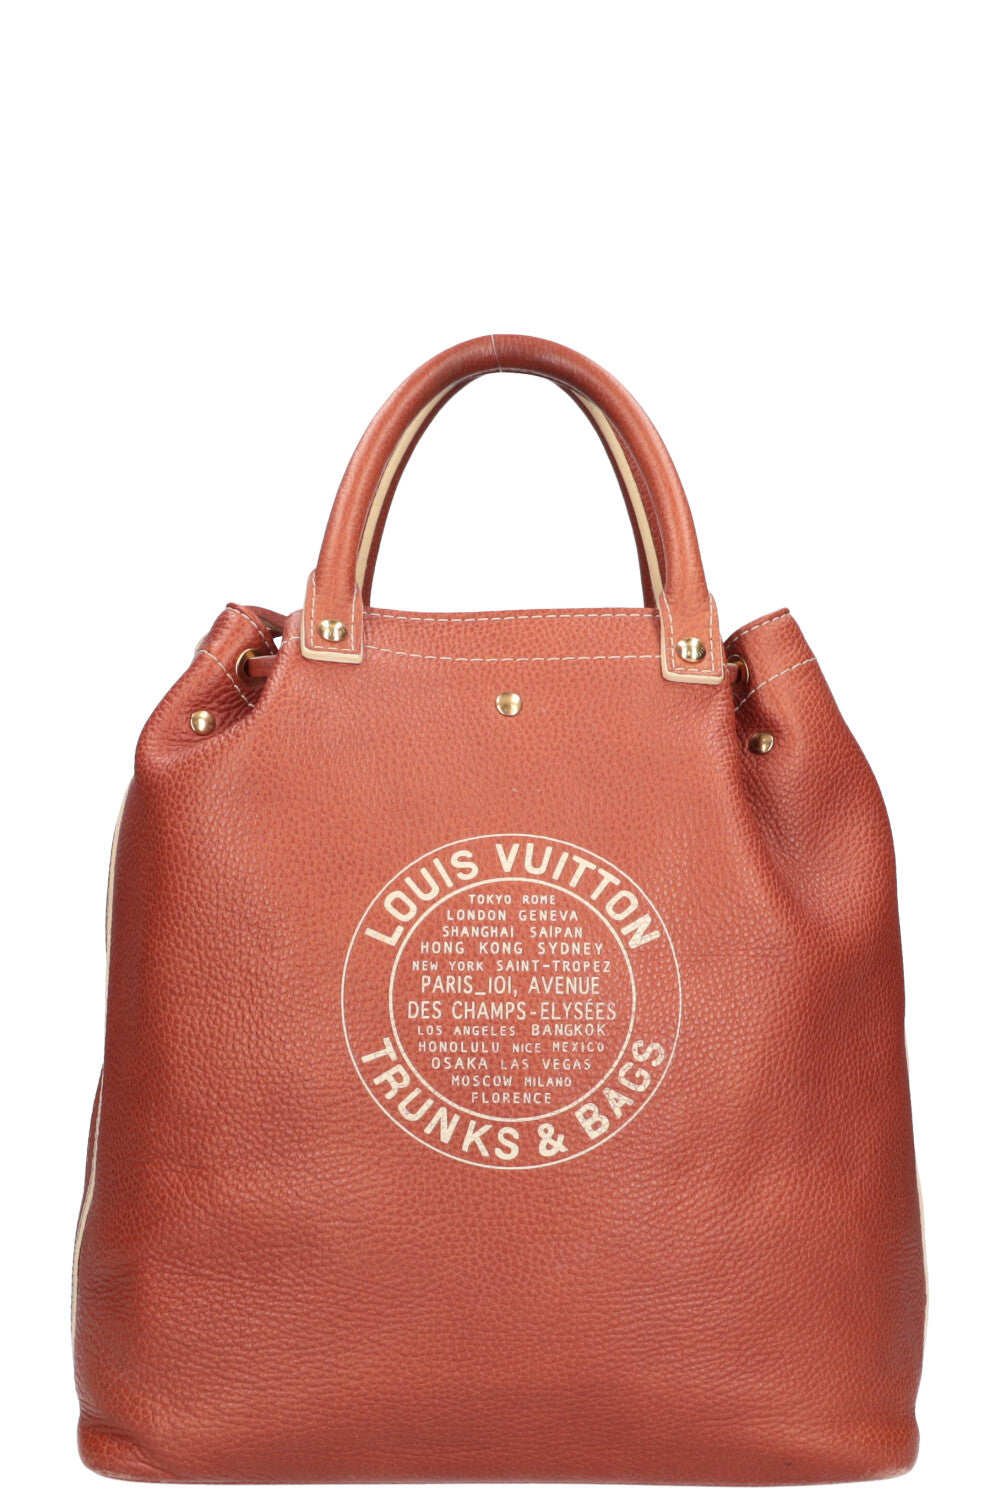 LOUIS VUITTON Trunks & Bags Bag